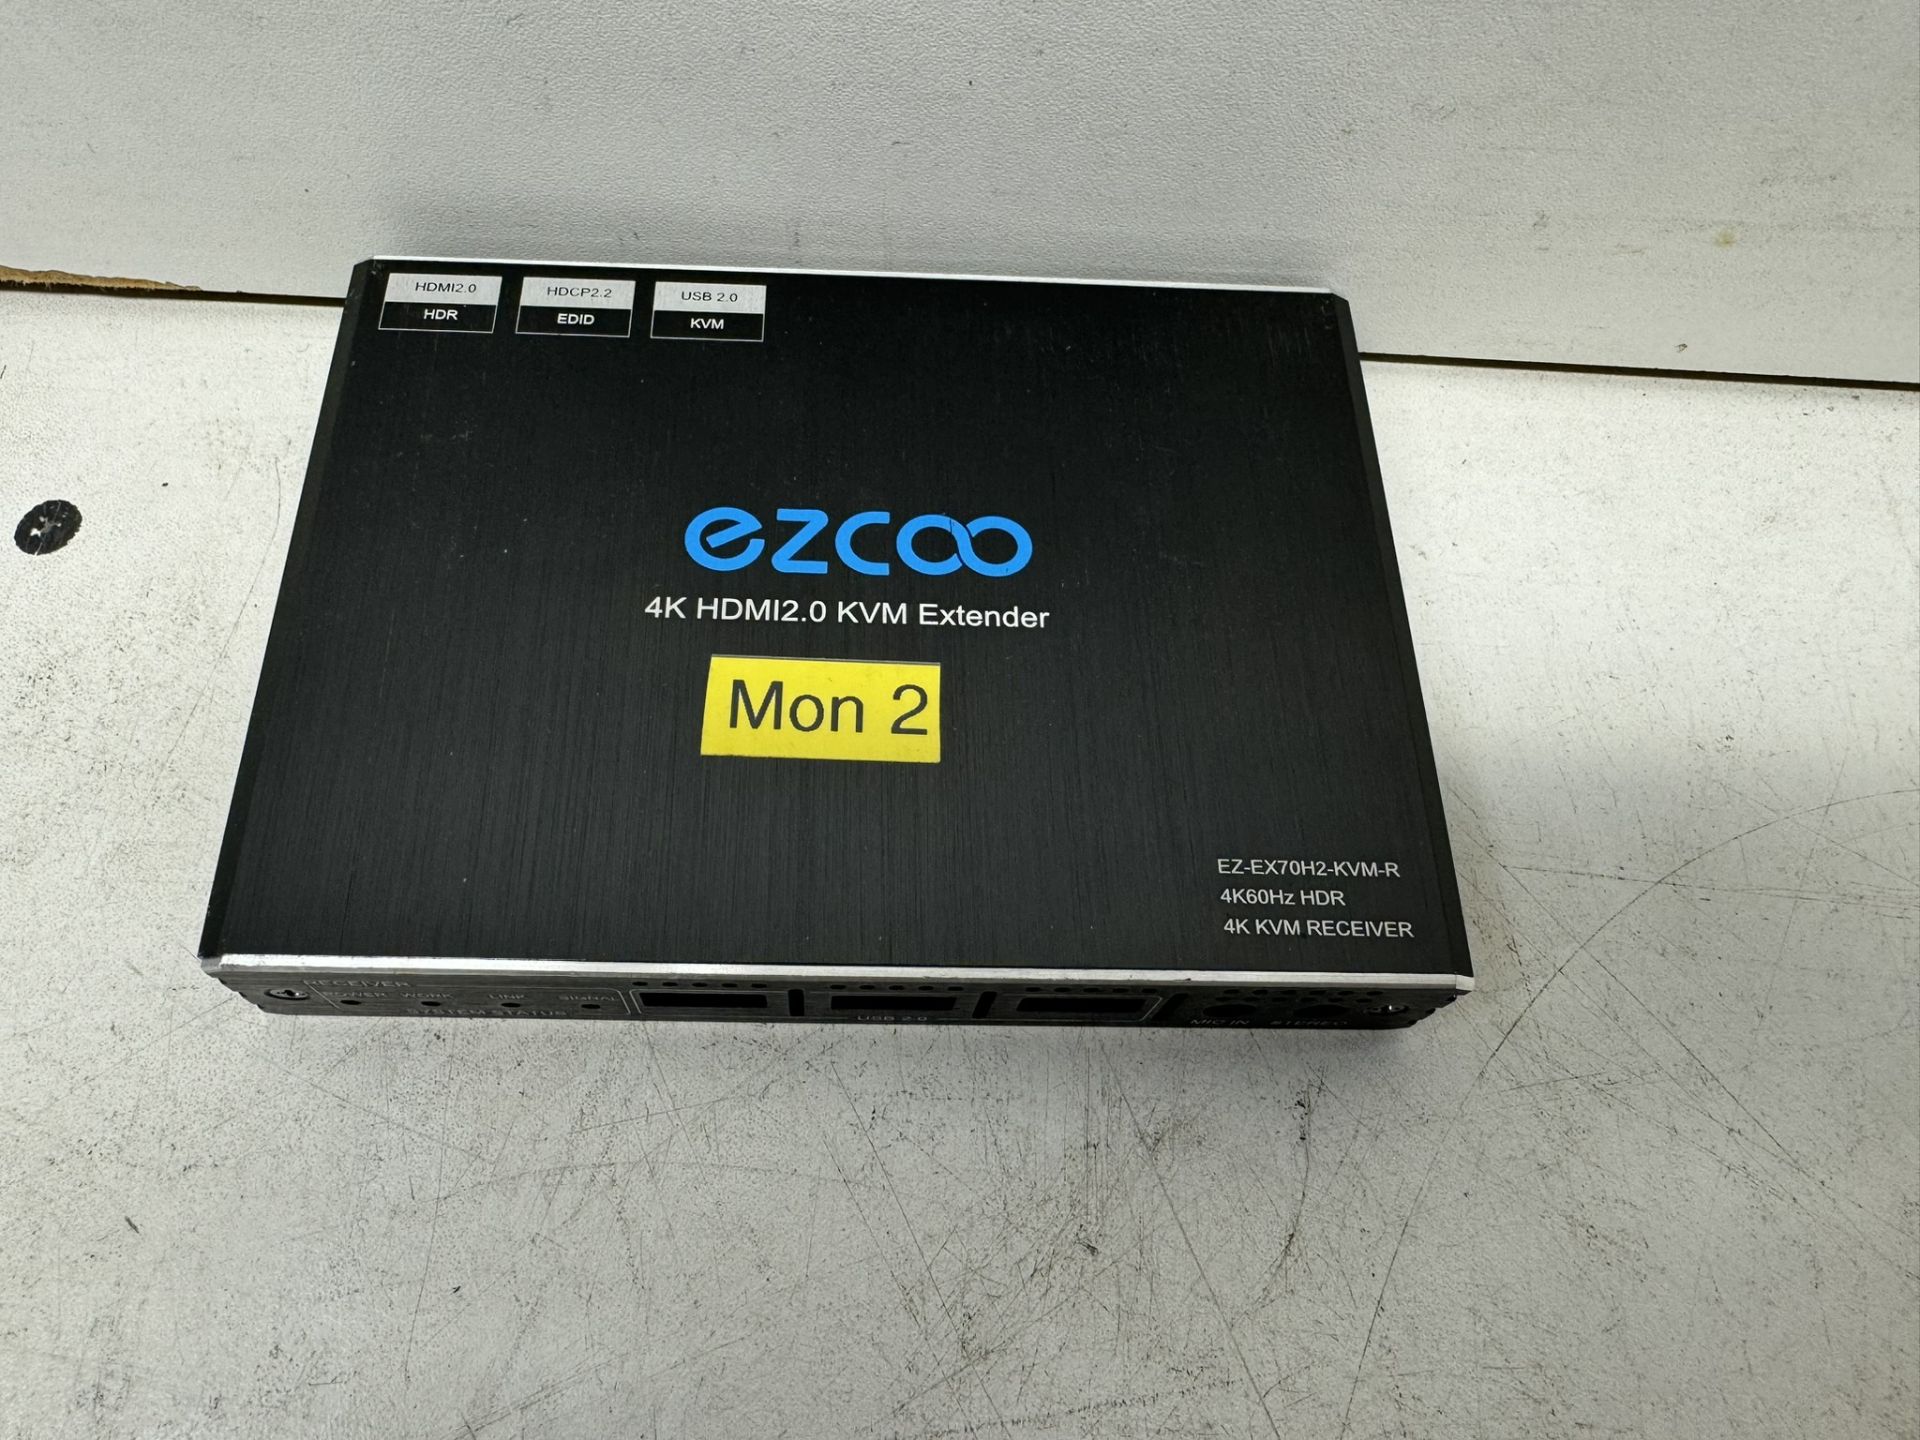 Ezcoo 4K HDMI 2.0 KVM Extender - Image 2 of 4